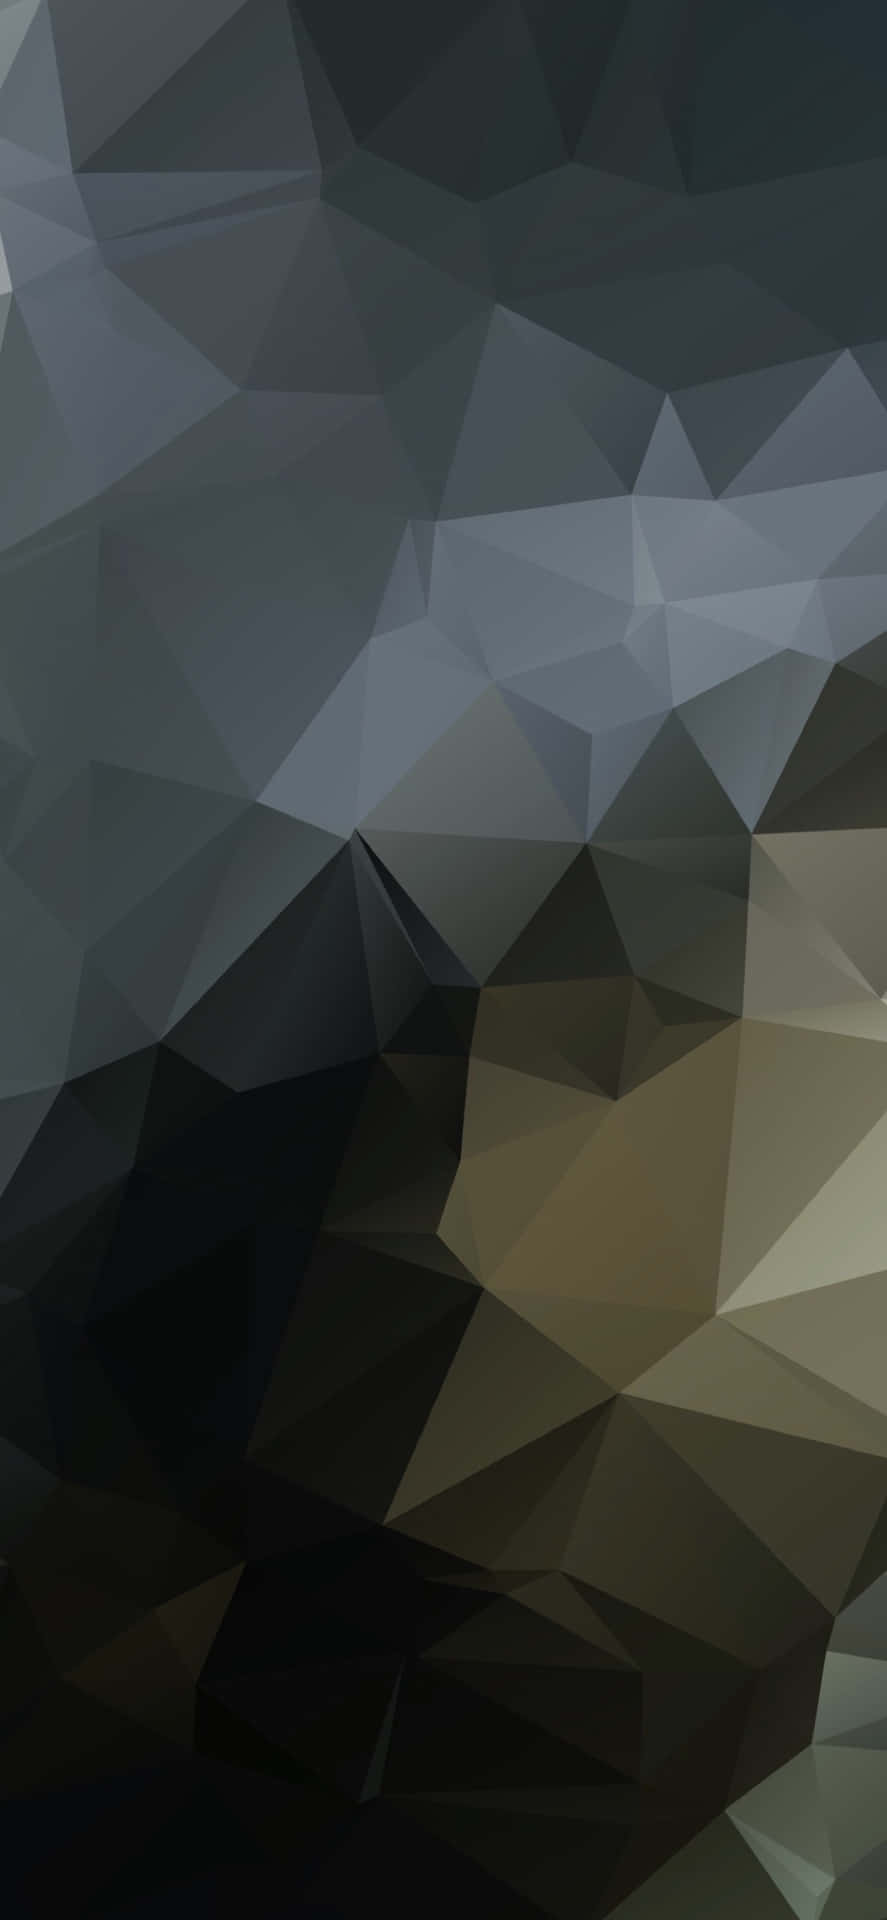 IPhones XS Max Black Geometrical Pattern Wallpaper